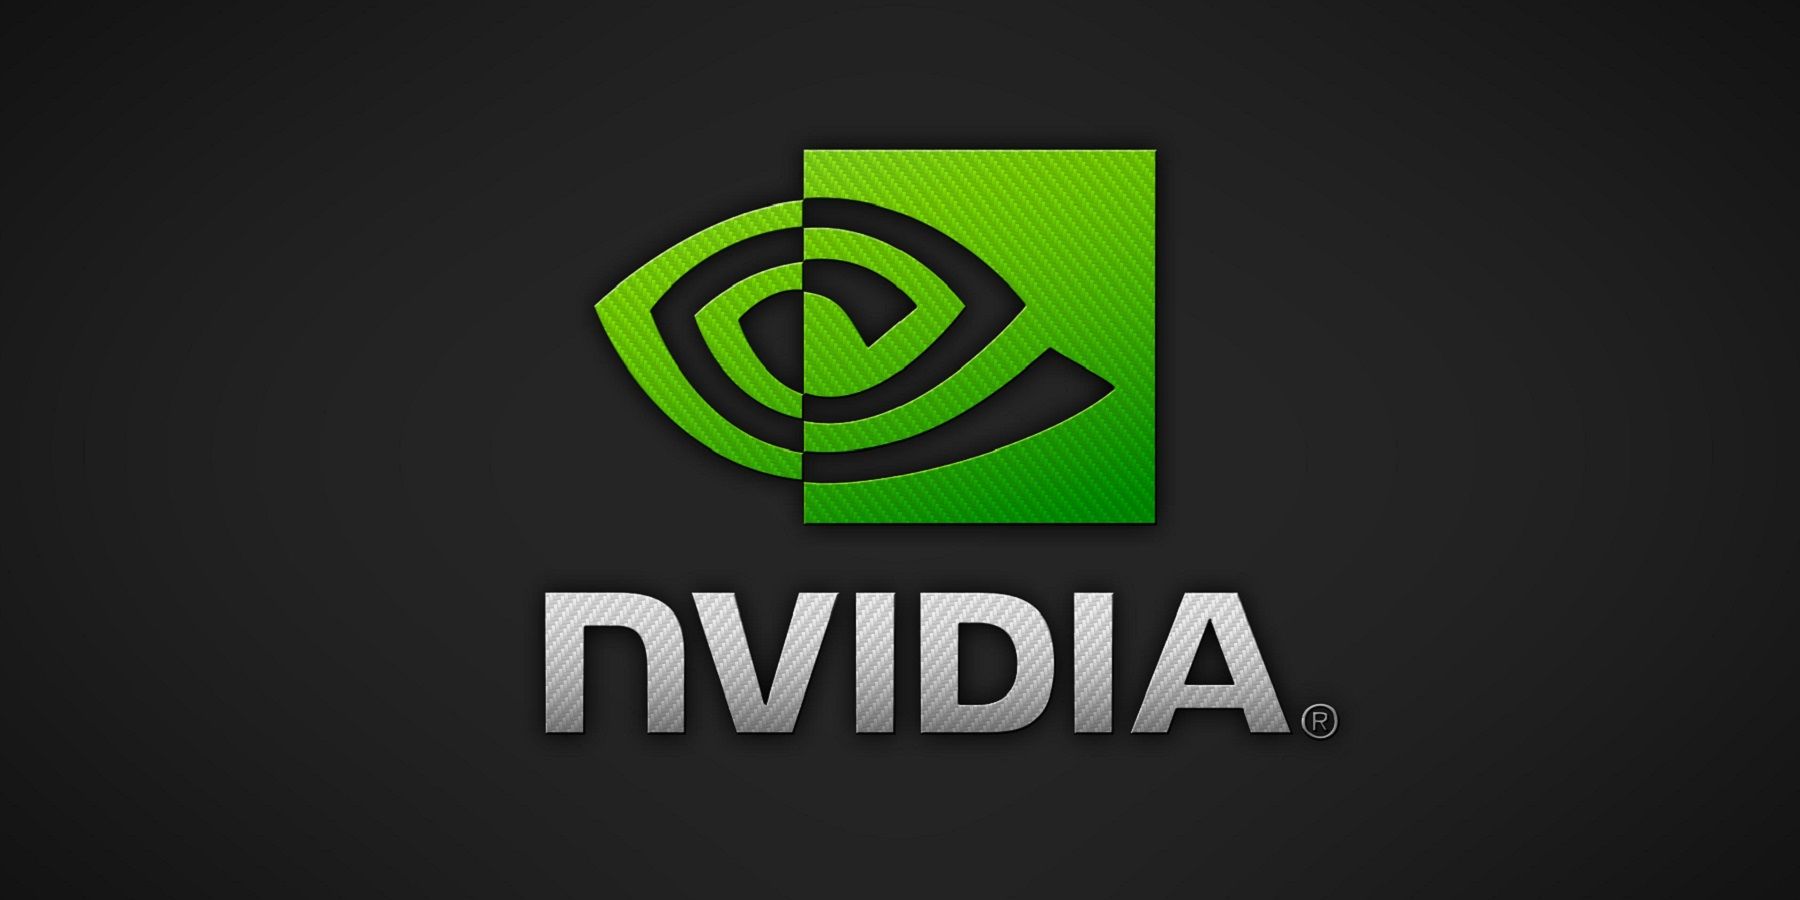 The Nvidia logo on a dark green background.